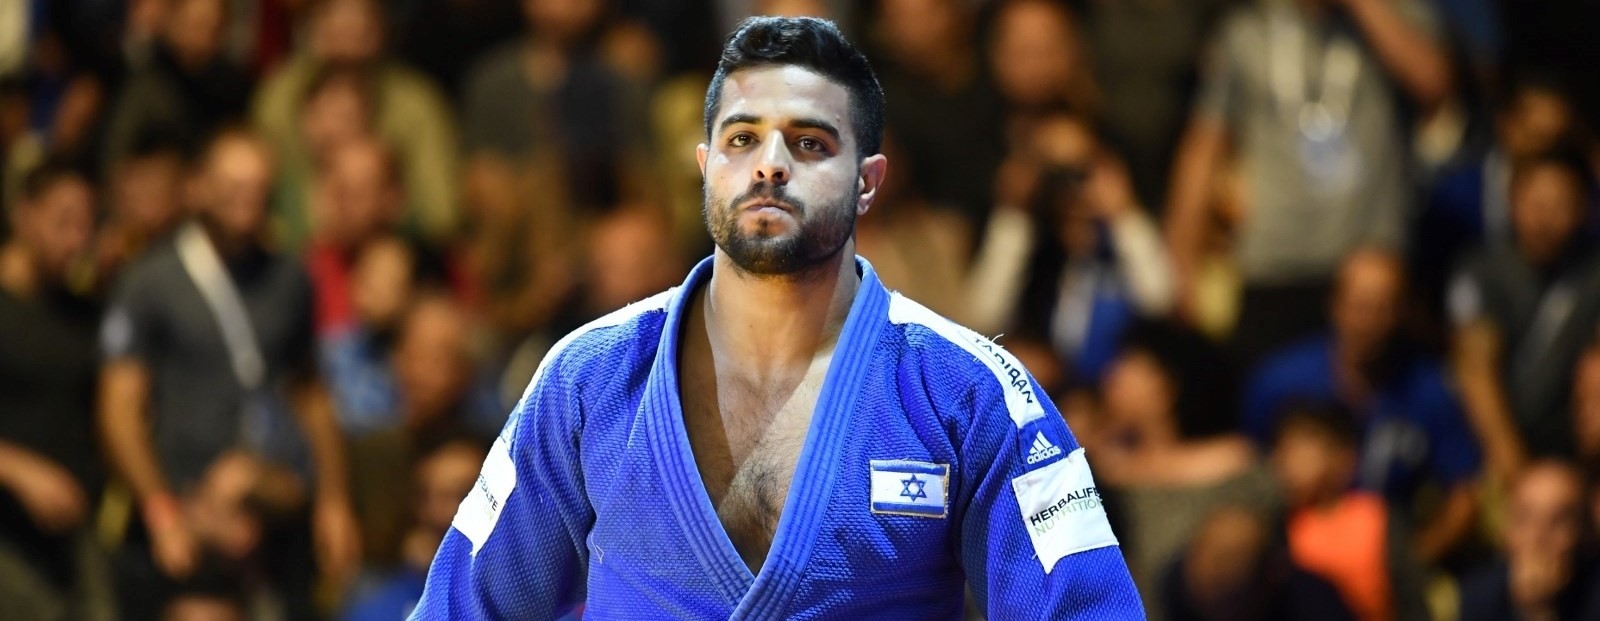 SAGI MUKI WINS GOLD! Israeli Judoka Crowned World Champion!